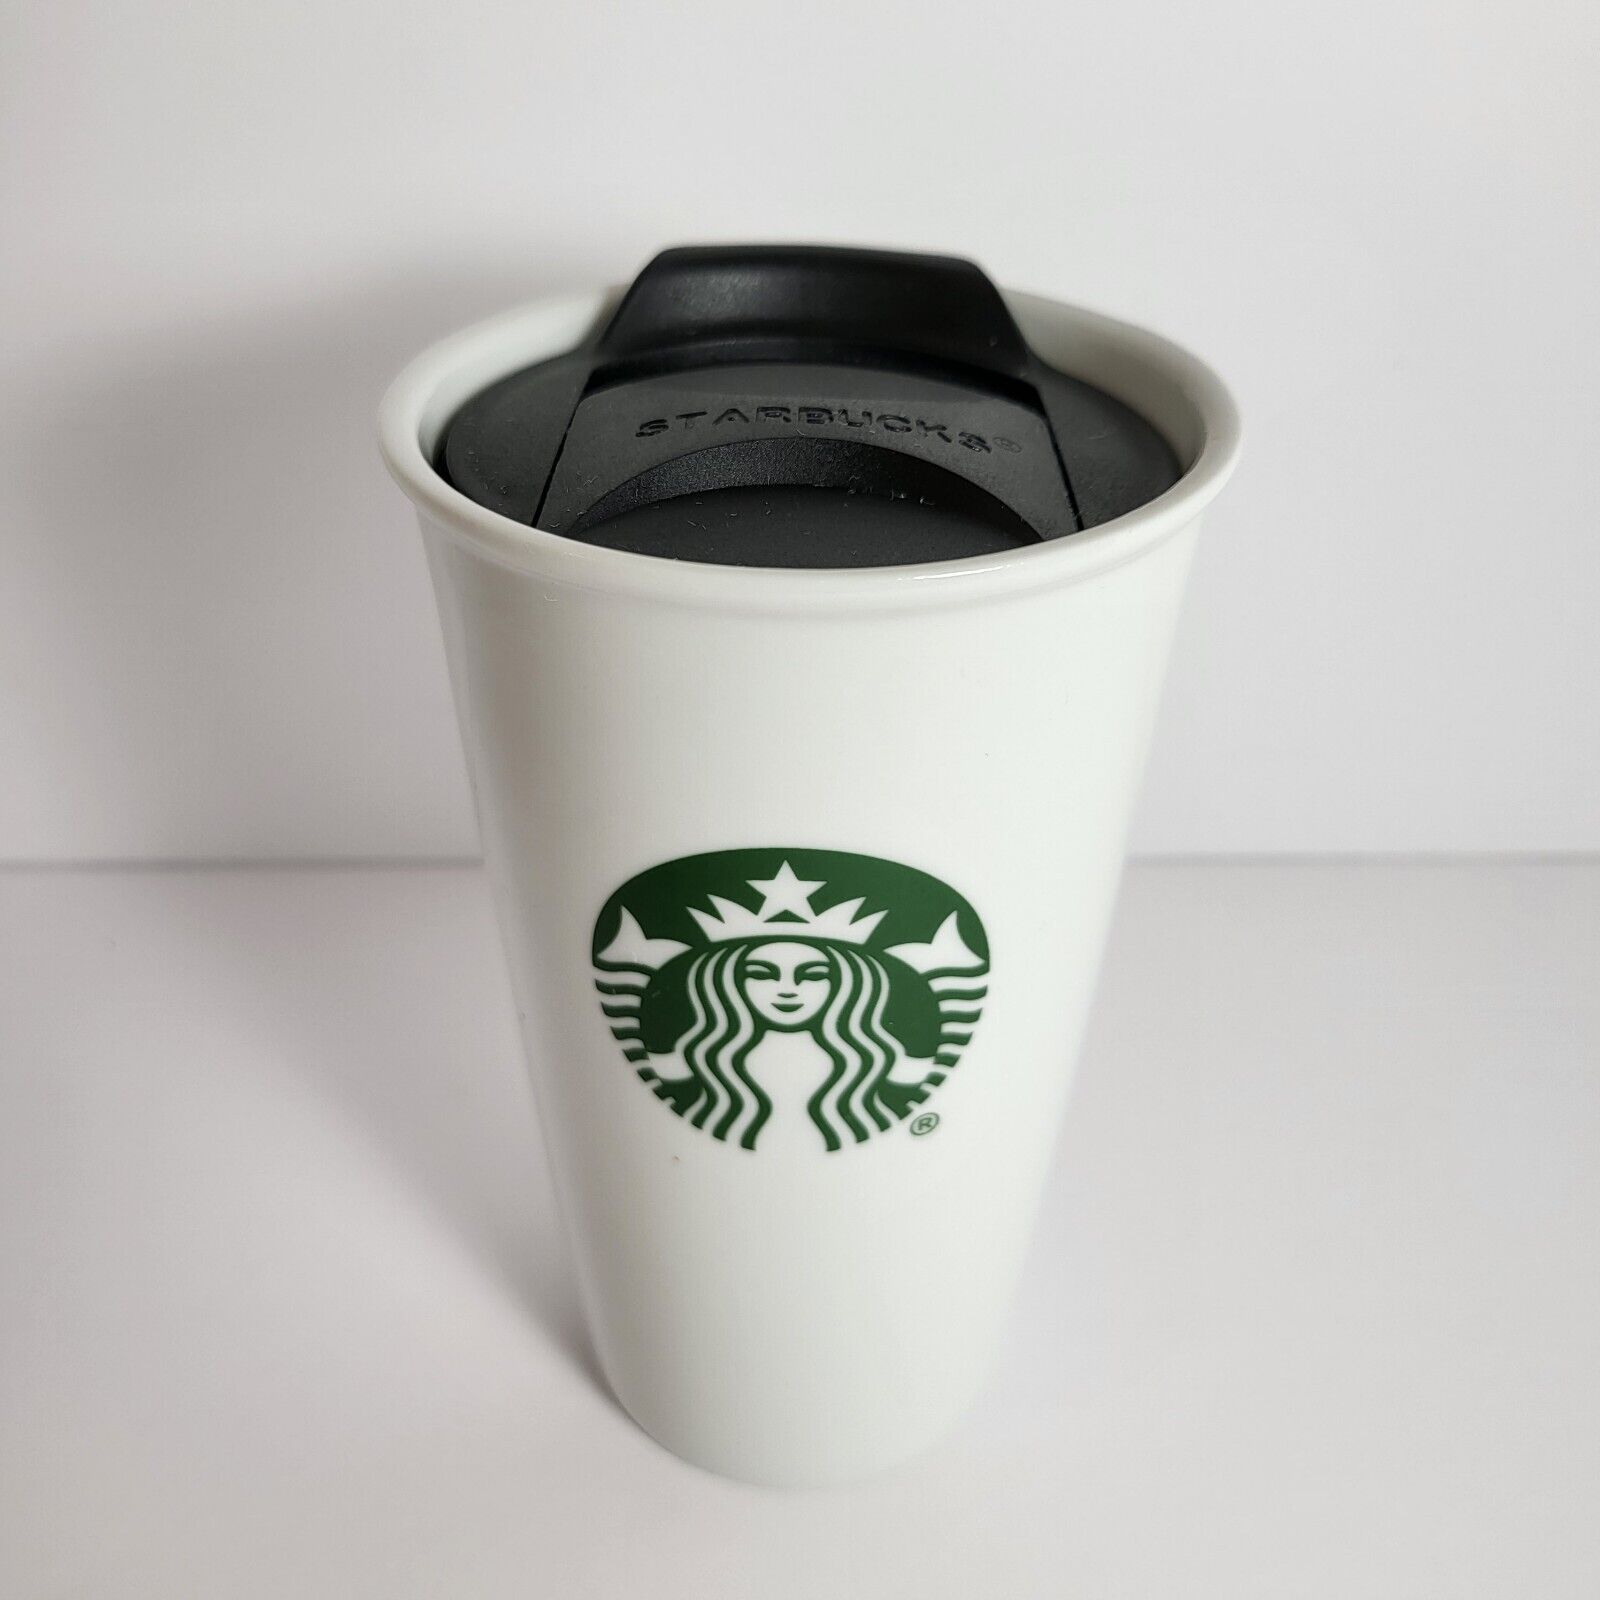 Starbucks Mug Mermaid Coffee Travel Tumbler w/ Lid 10 oz Ceramic White and Green